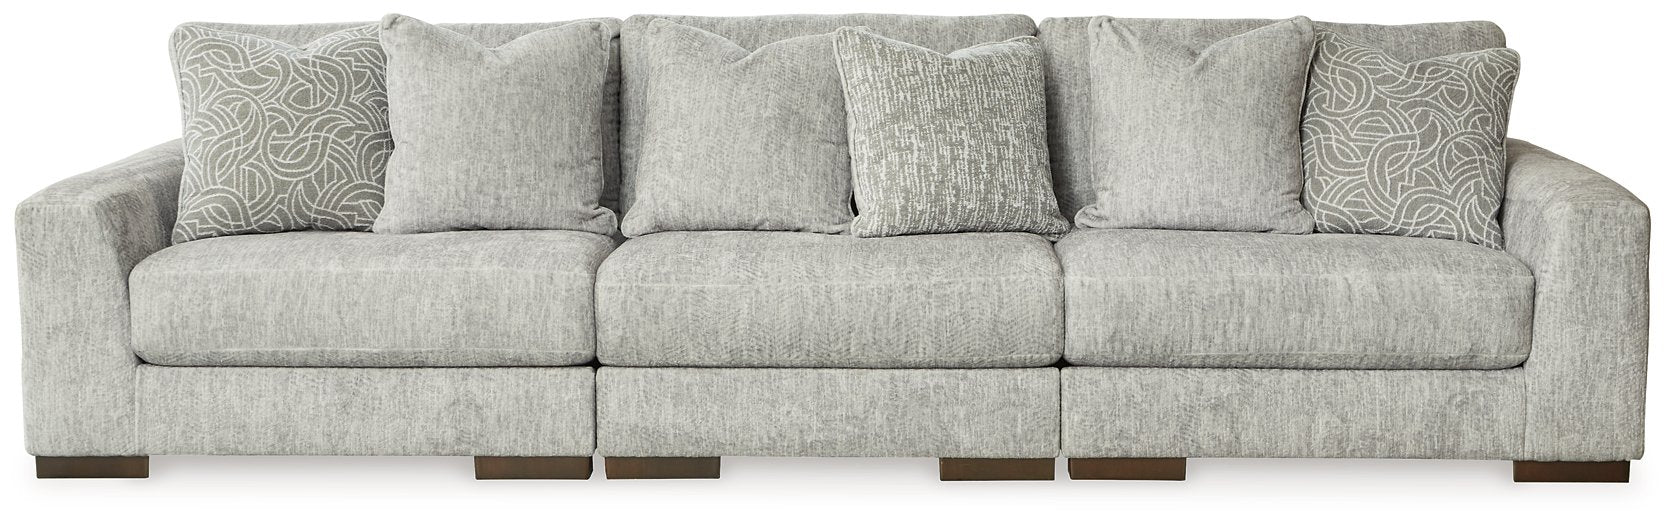 Regent Park 3-Piece Sofa Sectional Ashley Furniture